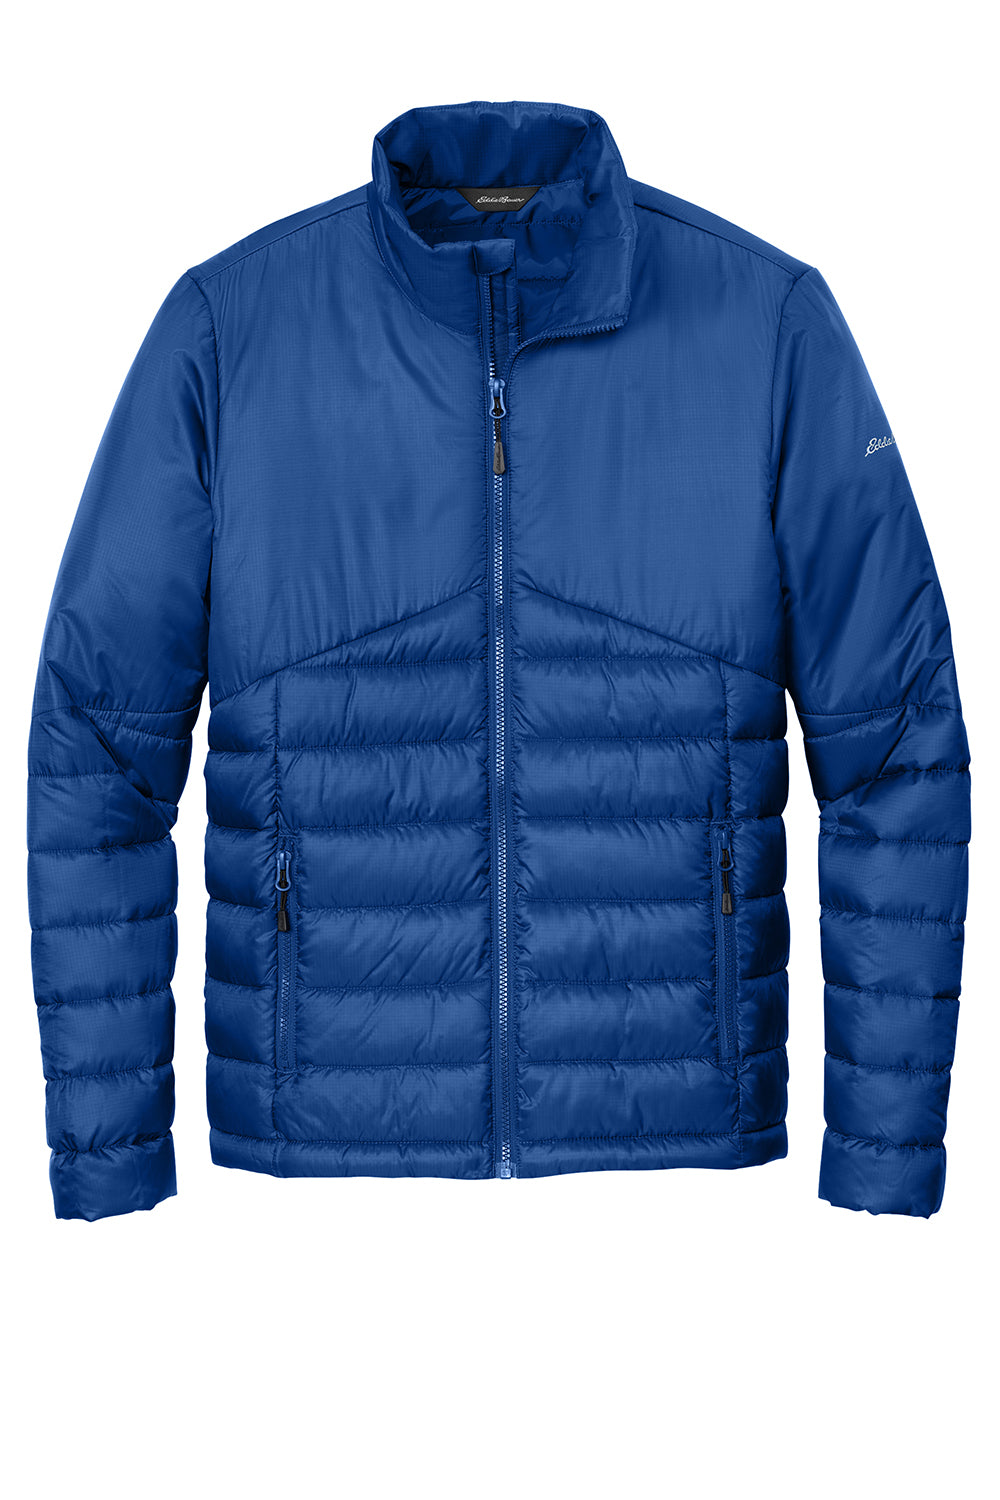 Eddie Bauer EB510 Mens Water Resistant Quilted Full Zip Jacket Cobalt Blue Flat Front